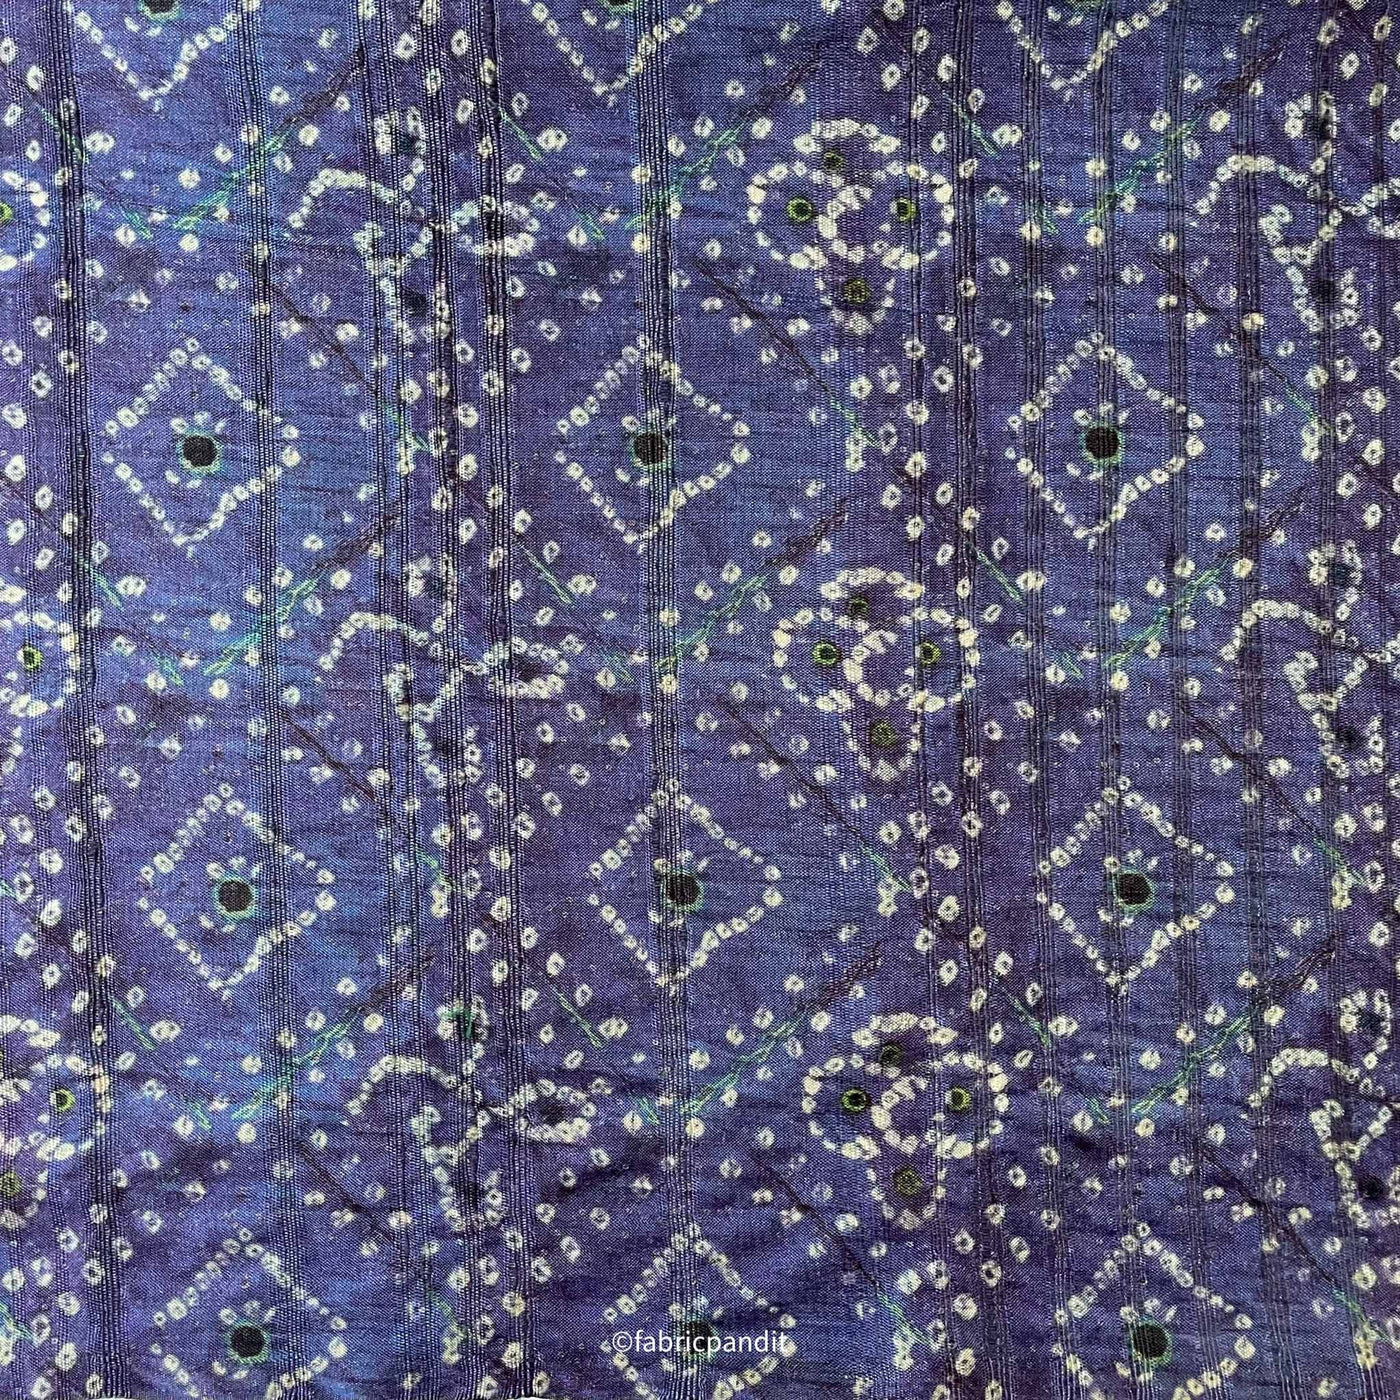 Fabric Pandit Fabric Slate Blue Bandhani Digital Printed Tussar Silk Fabric (Width 44 Inches)